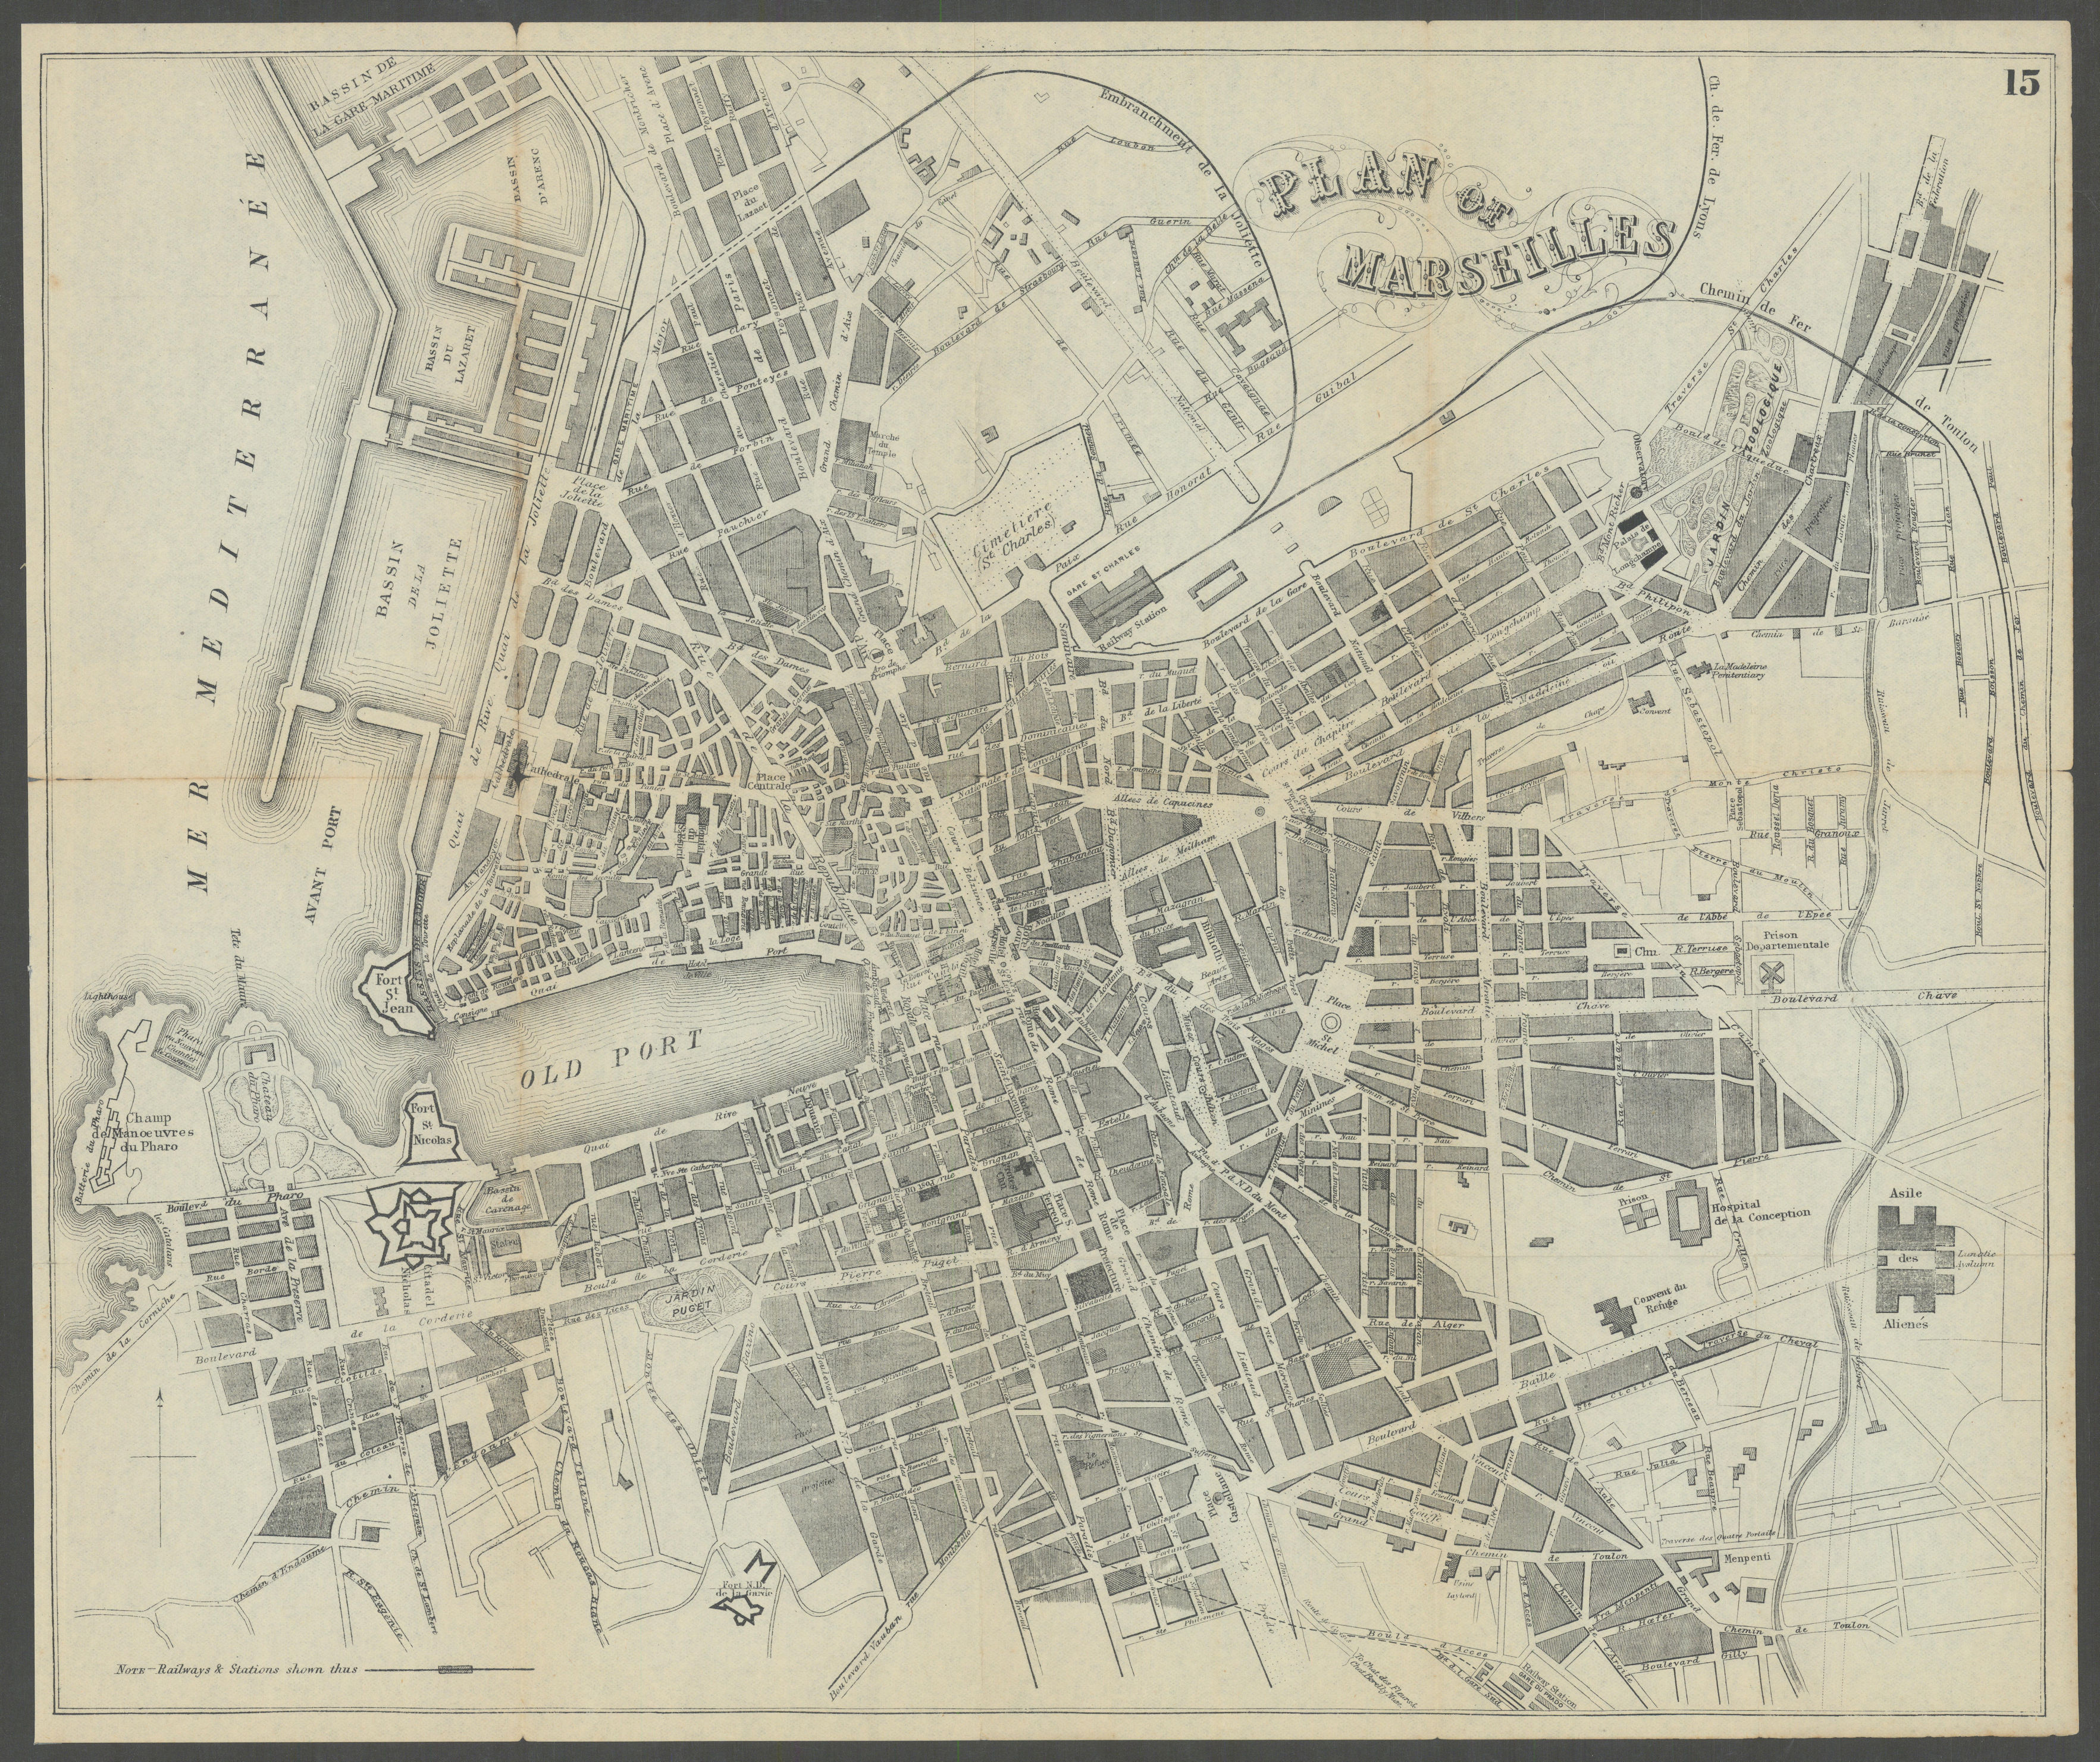 Associate Product MARSEILLES antique town plan city map. France. BRADSHAW c1899 old